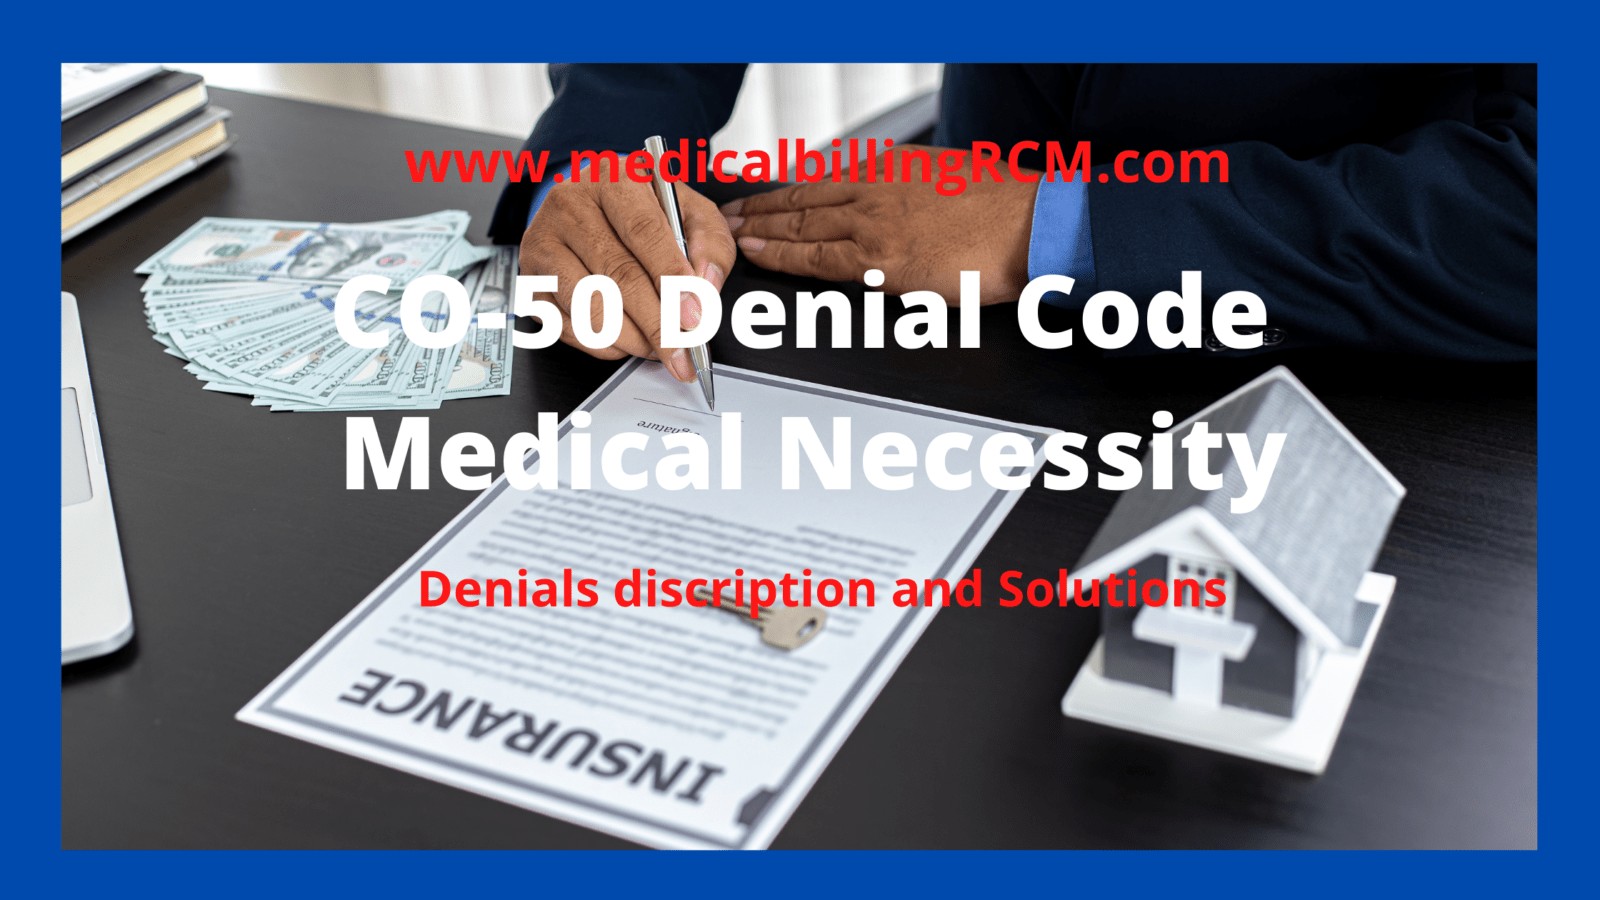 co 50 denial code description and handling